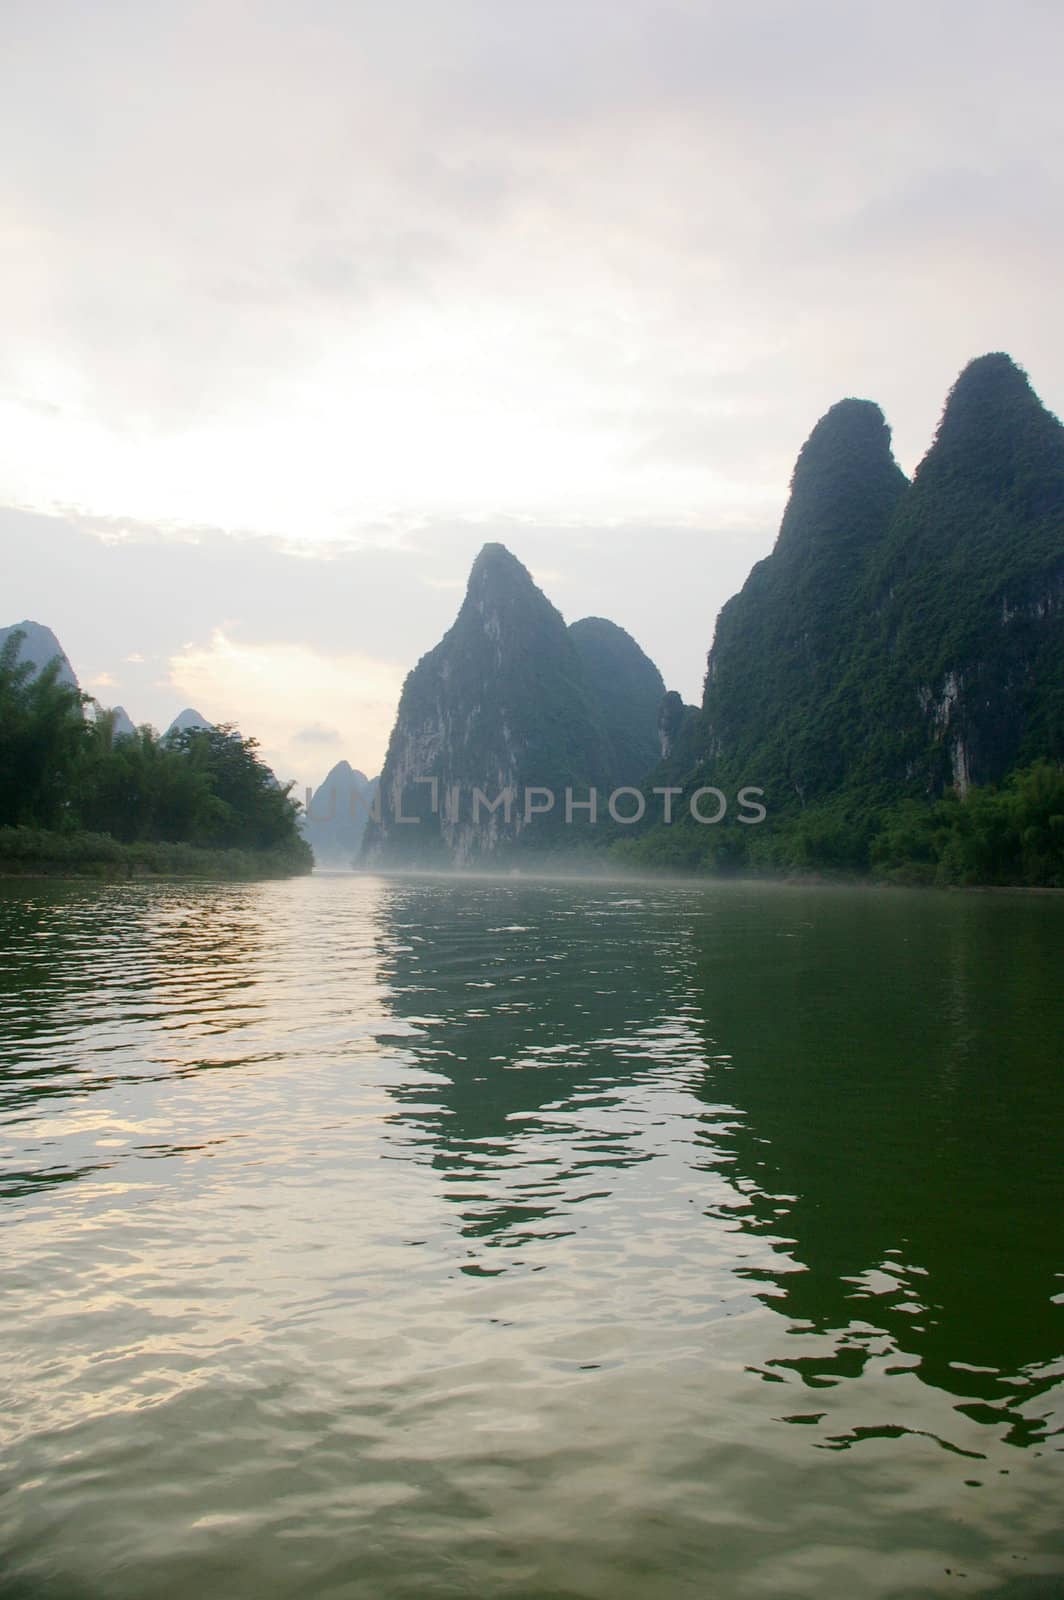 Beautiful Karst mountain landscape in Yangshuo Guilin, China by kawing921